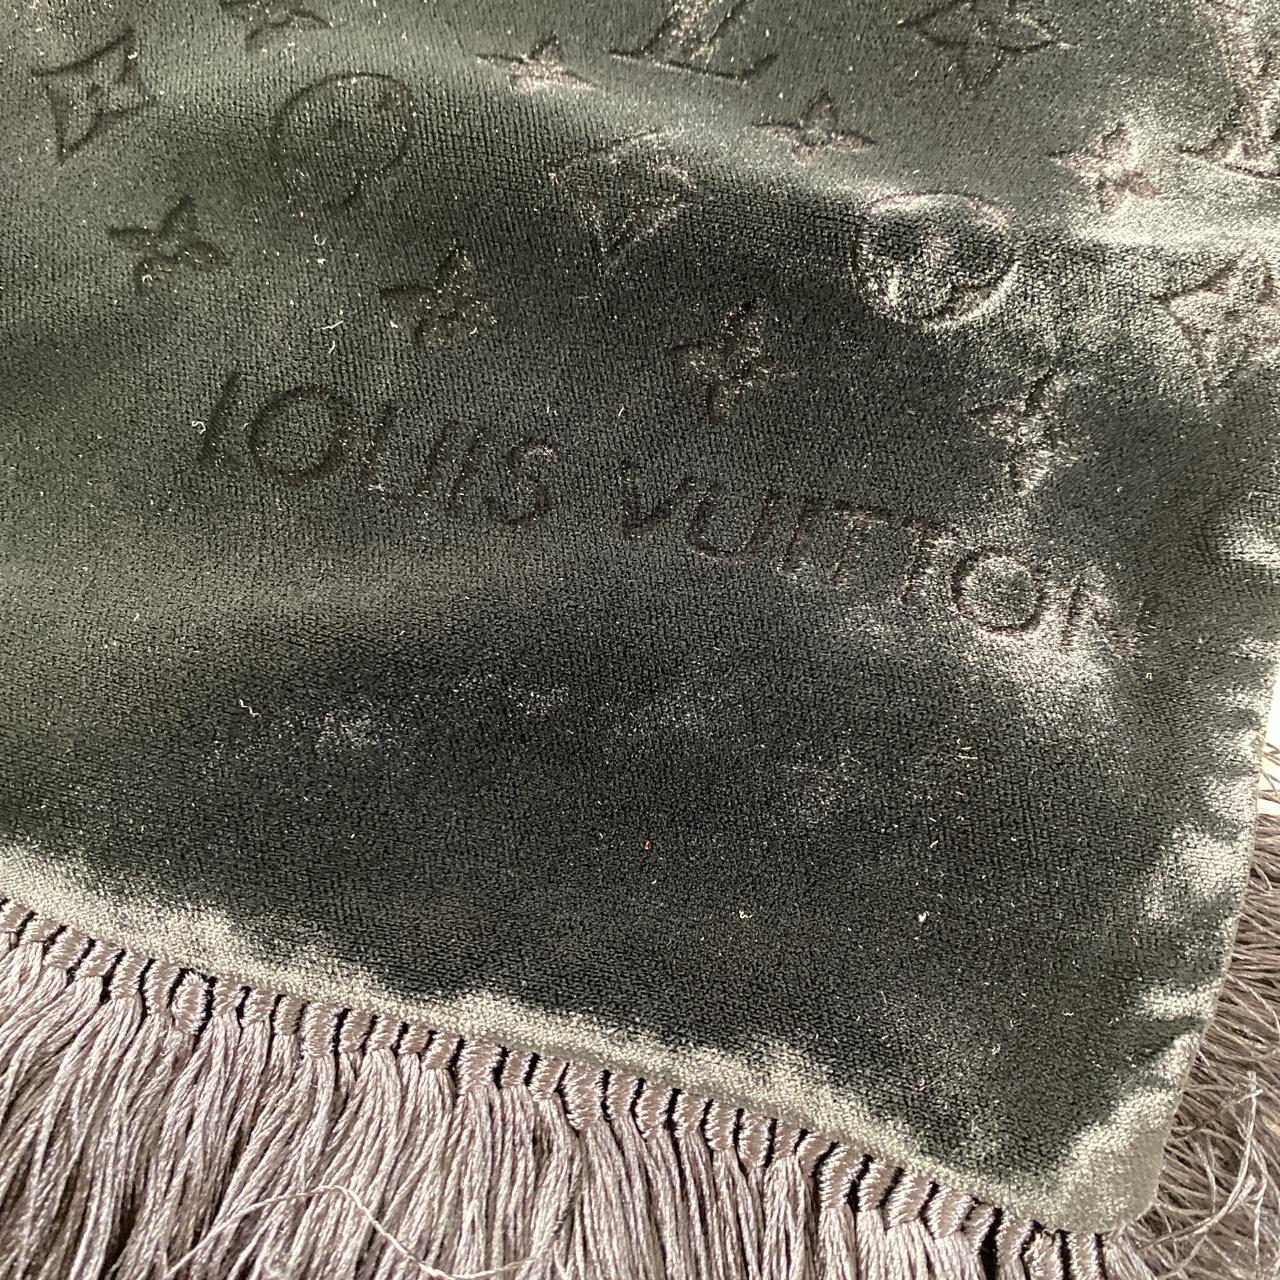 VTG Louis Vuitton Monogram Wool Scarf This Vintage - Depop